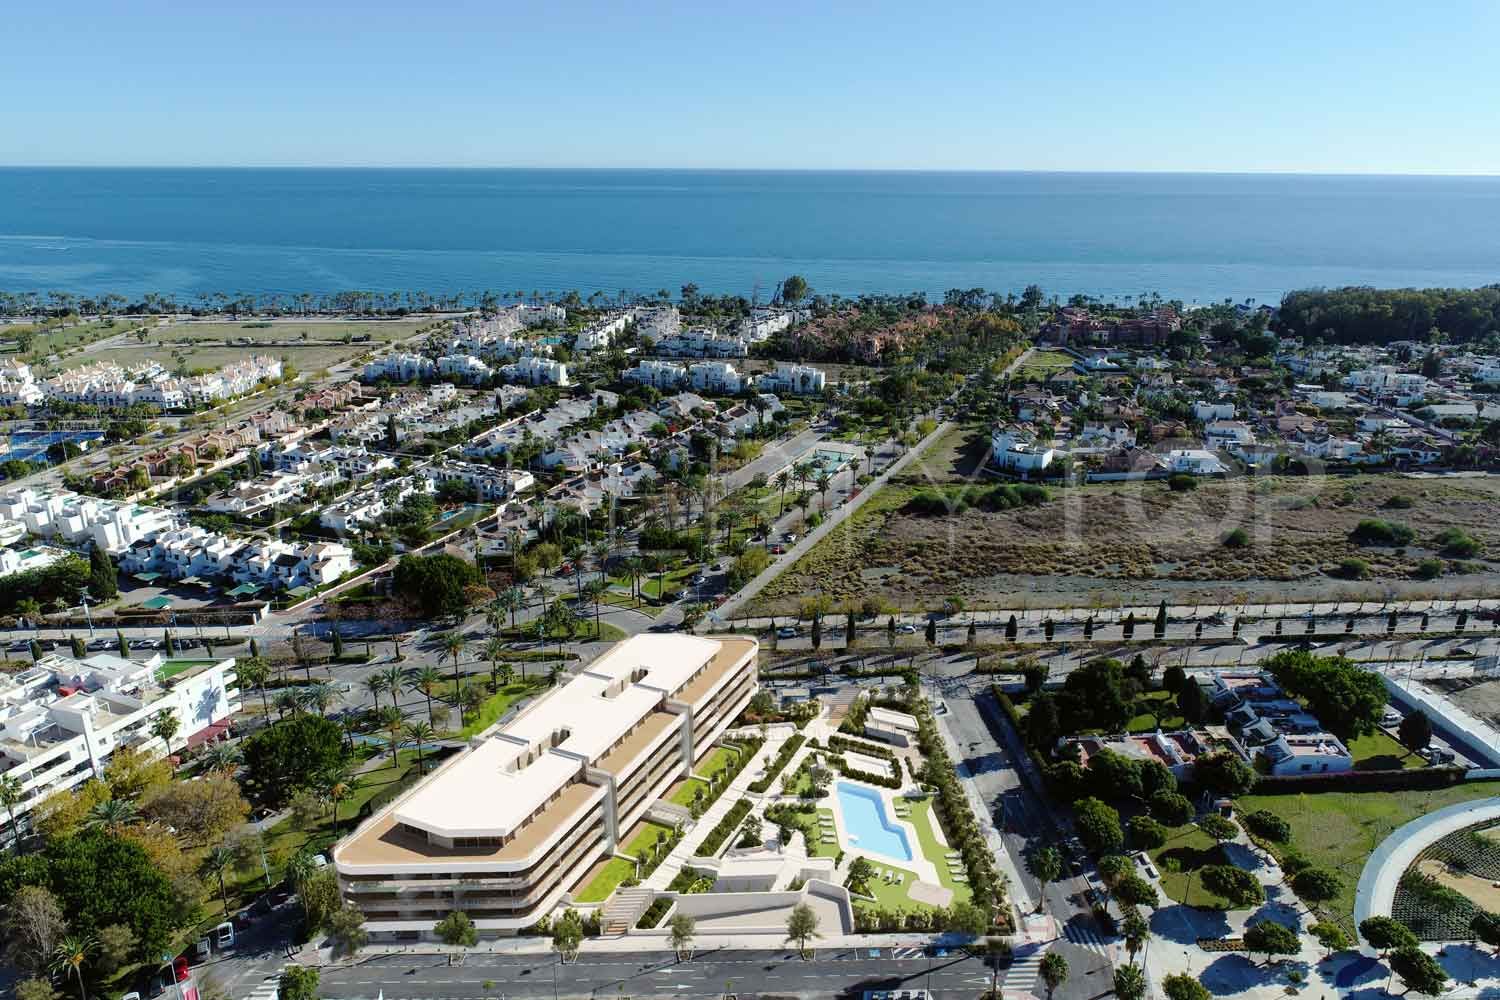 San Pedro Playa apartment for sale